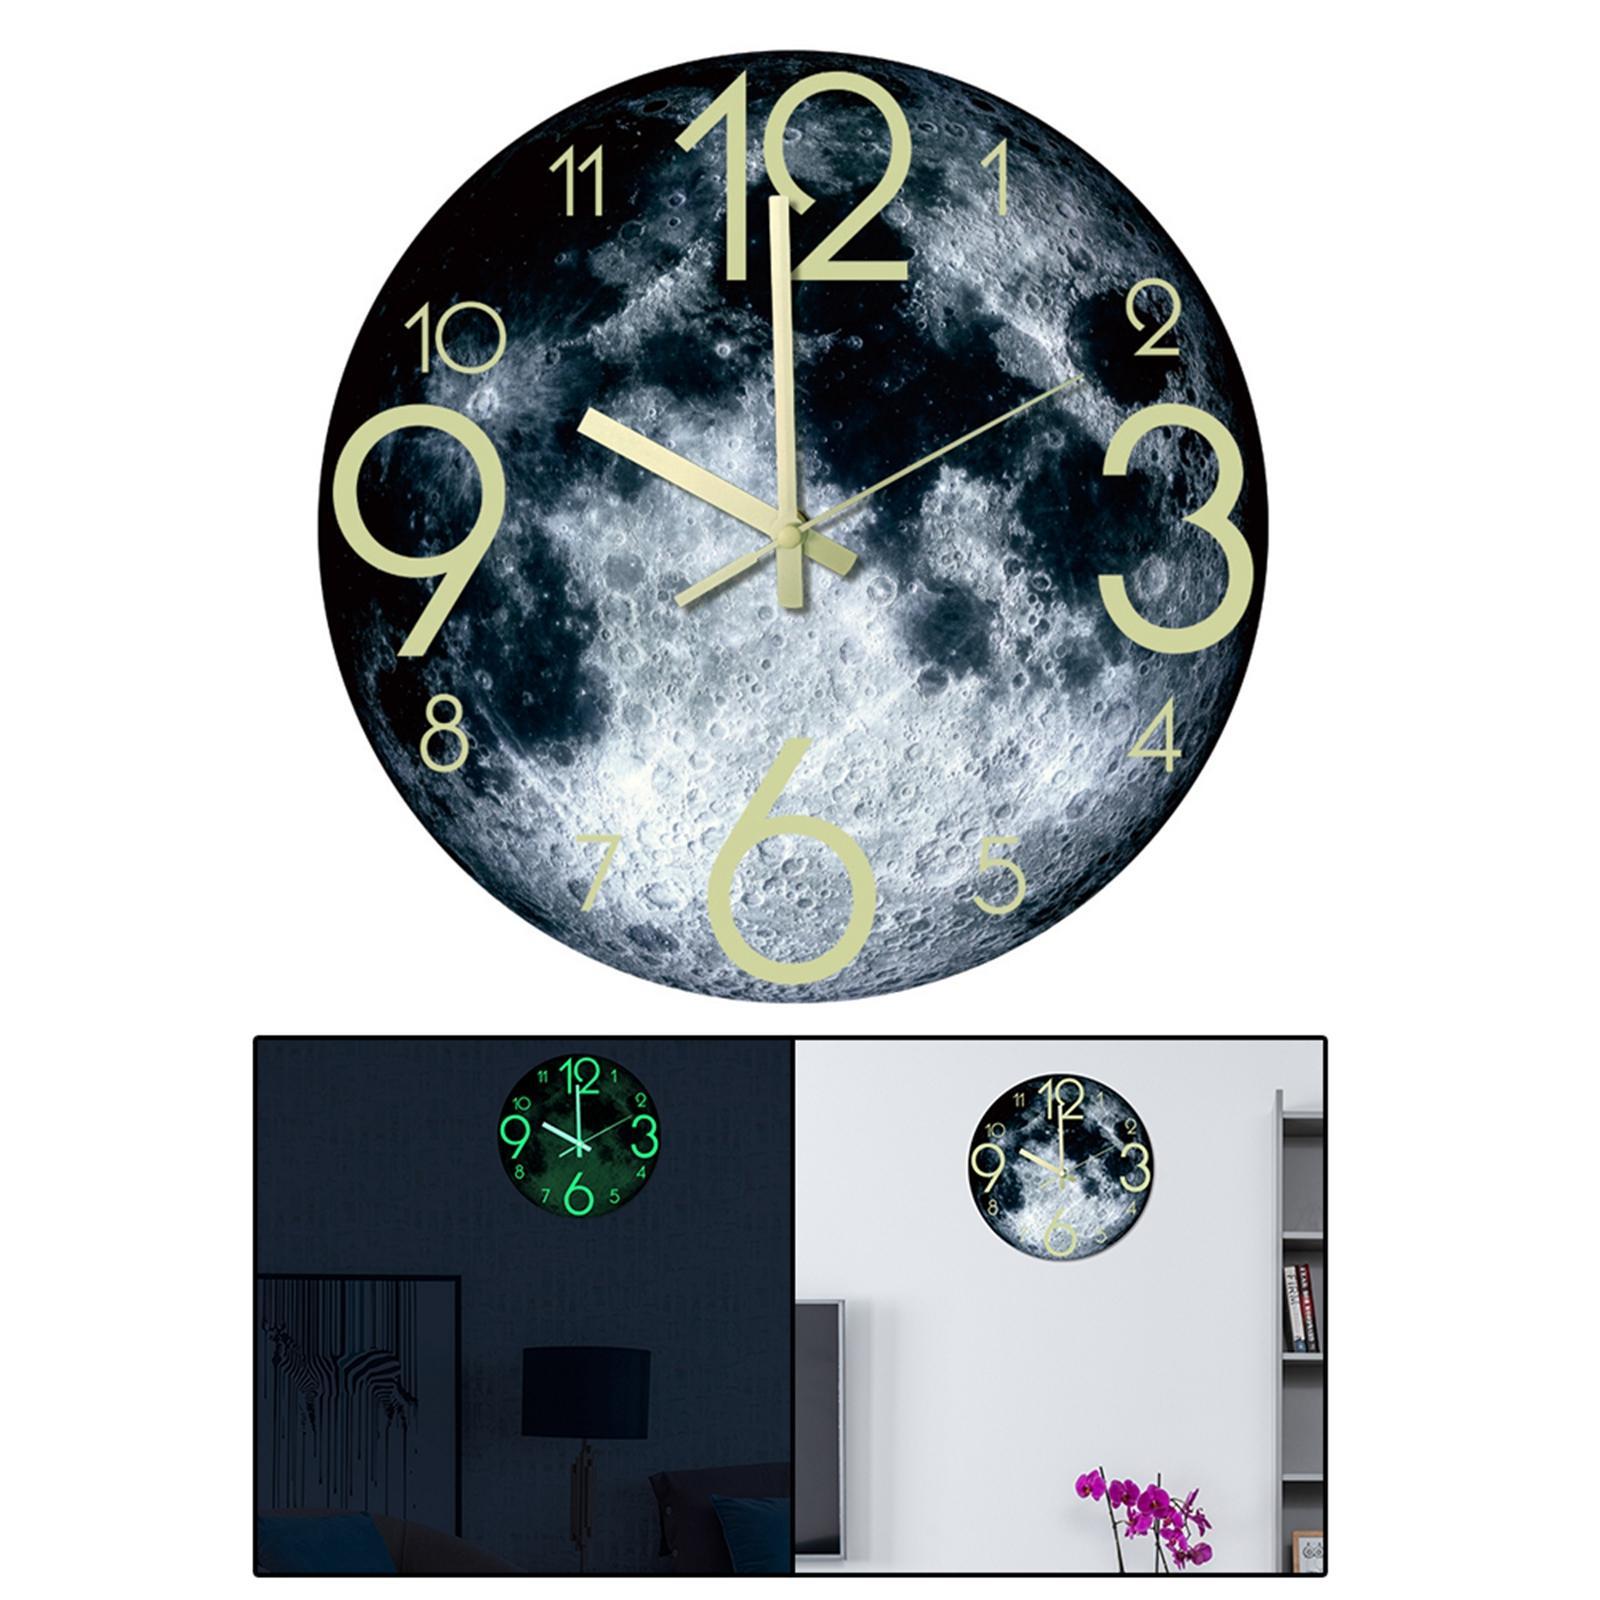 Home Office Decor Watch Decorative Moon